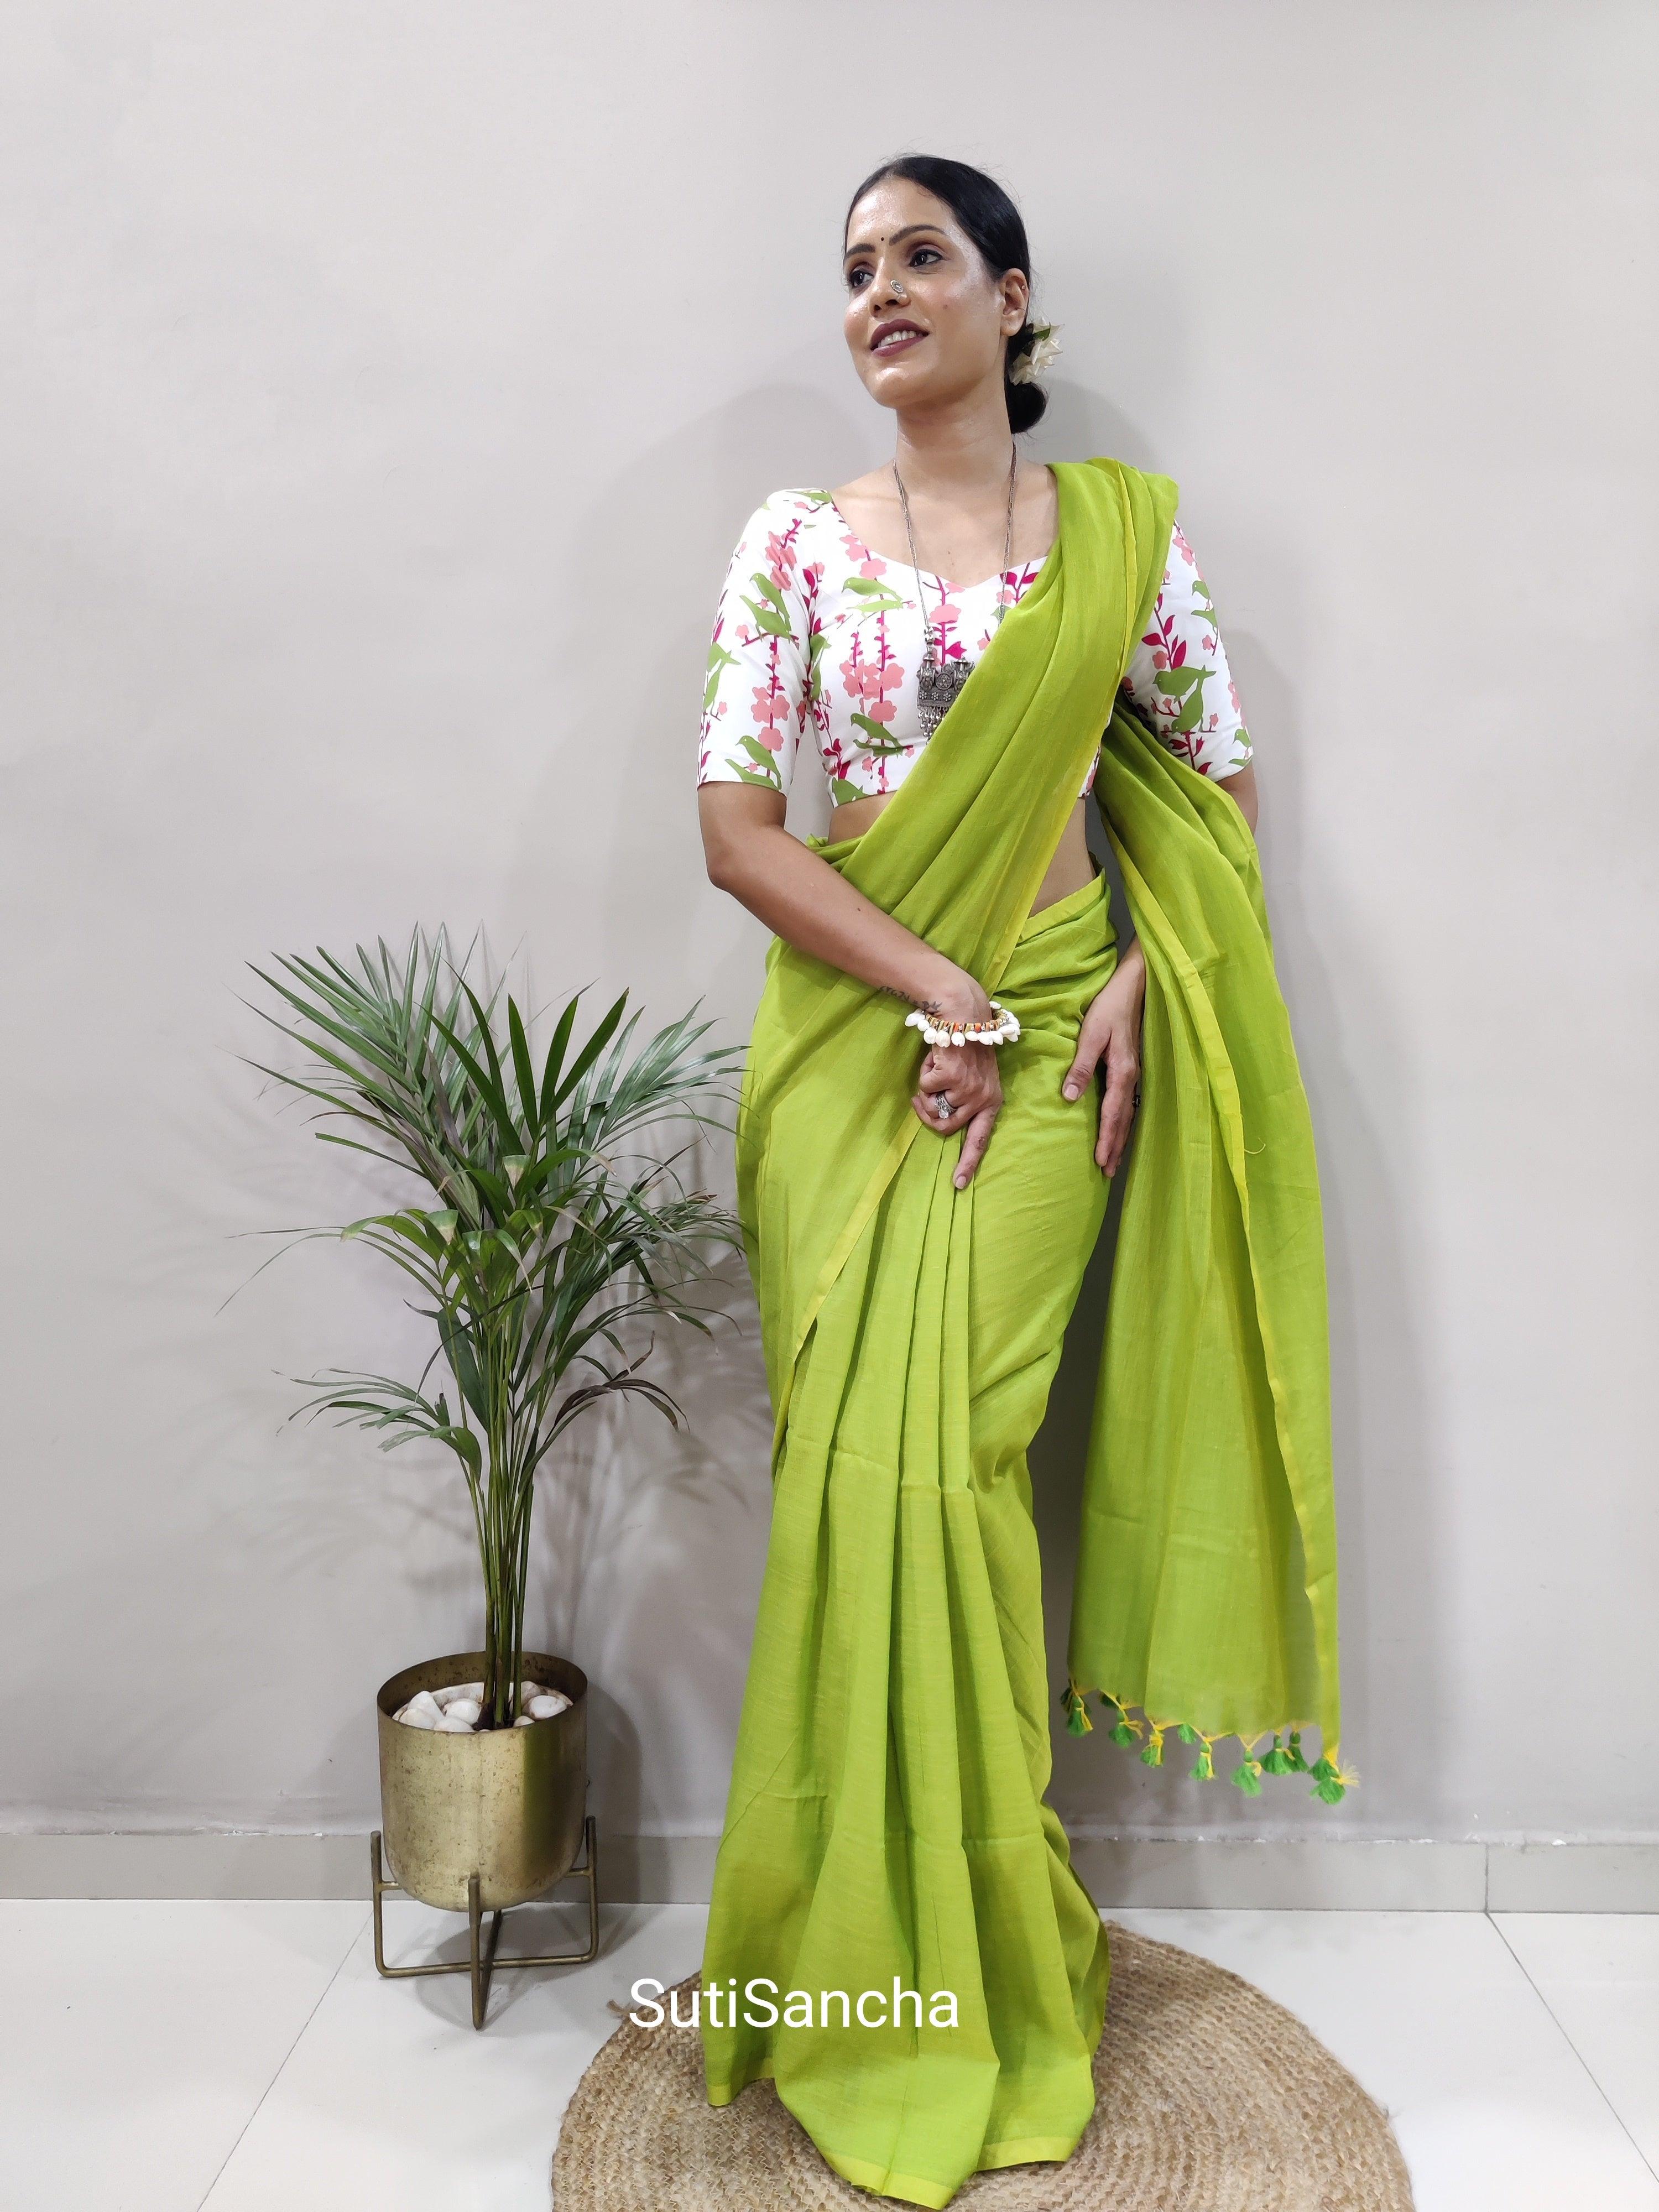 Sutisancha Parrot colour Khadi Saree & designer Blouse - Suti Sancha